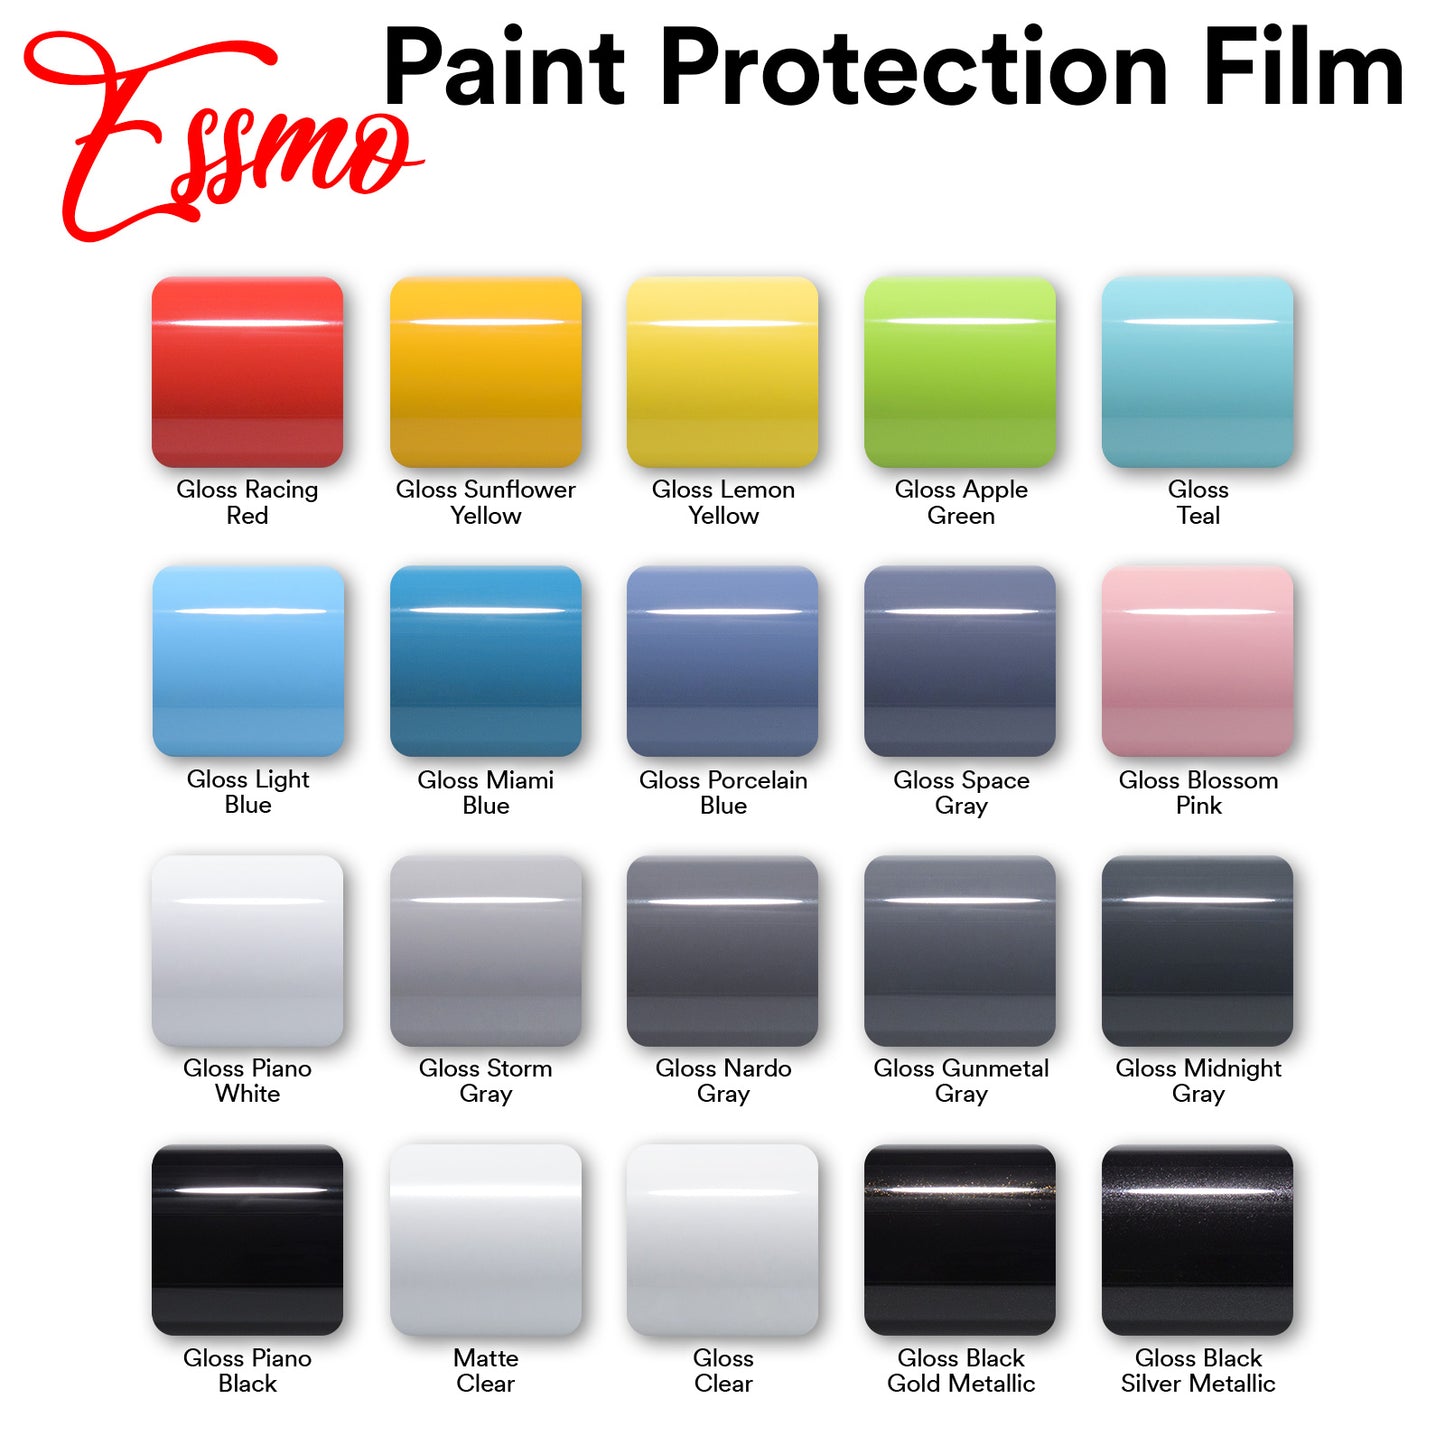 ESSMO Piano Black Paint Protection Film Gloss